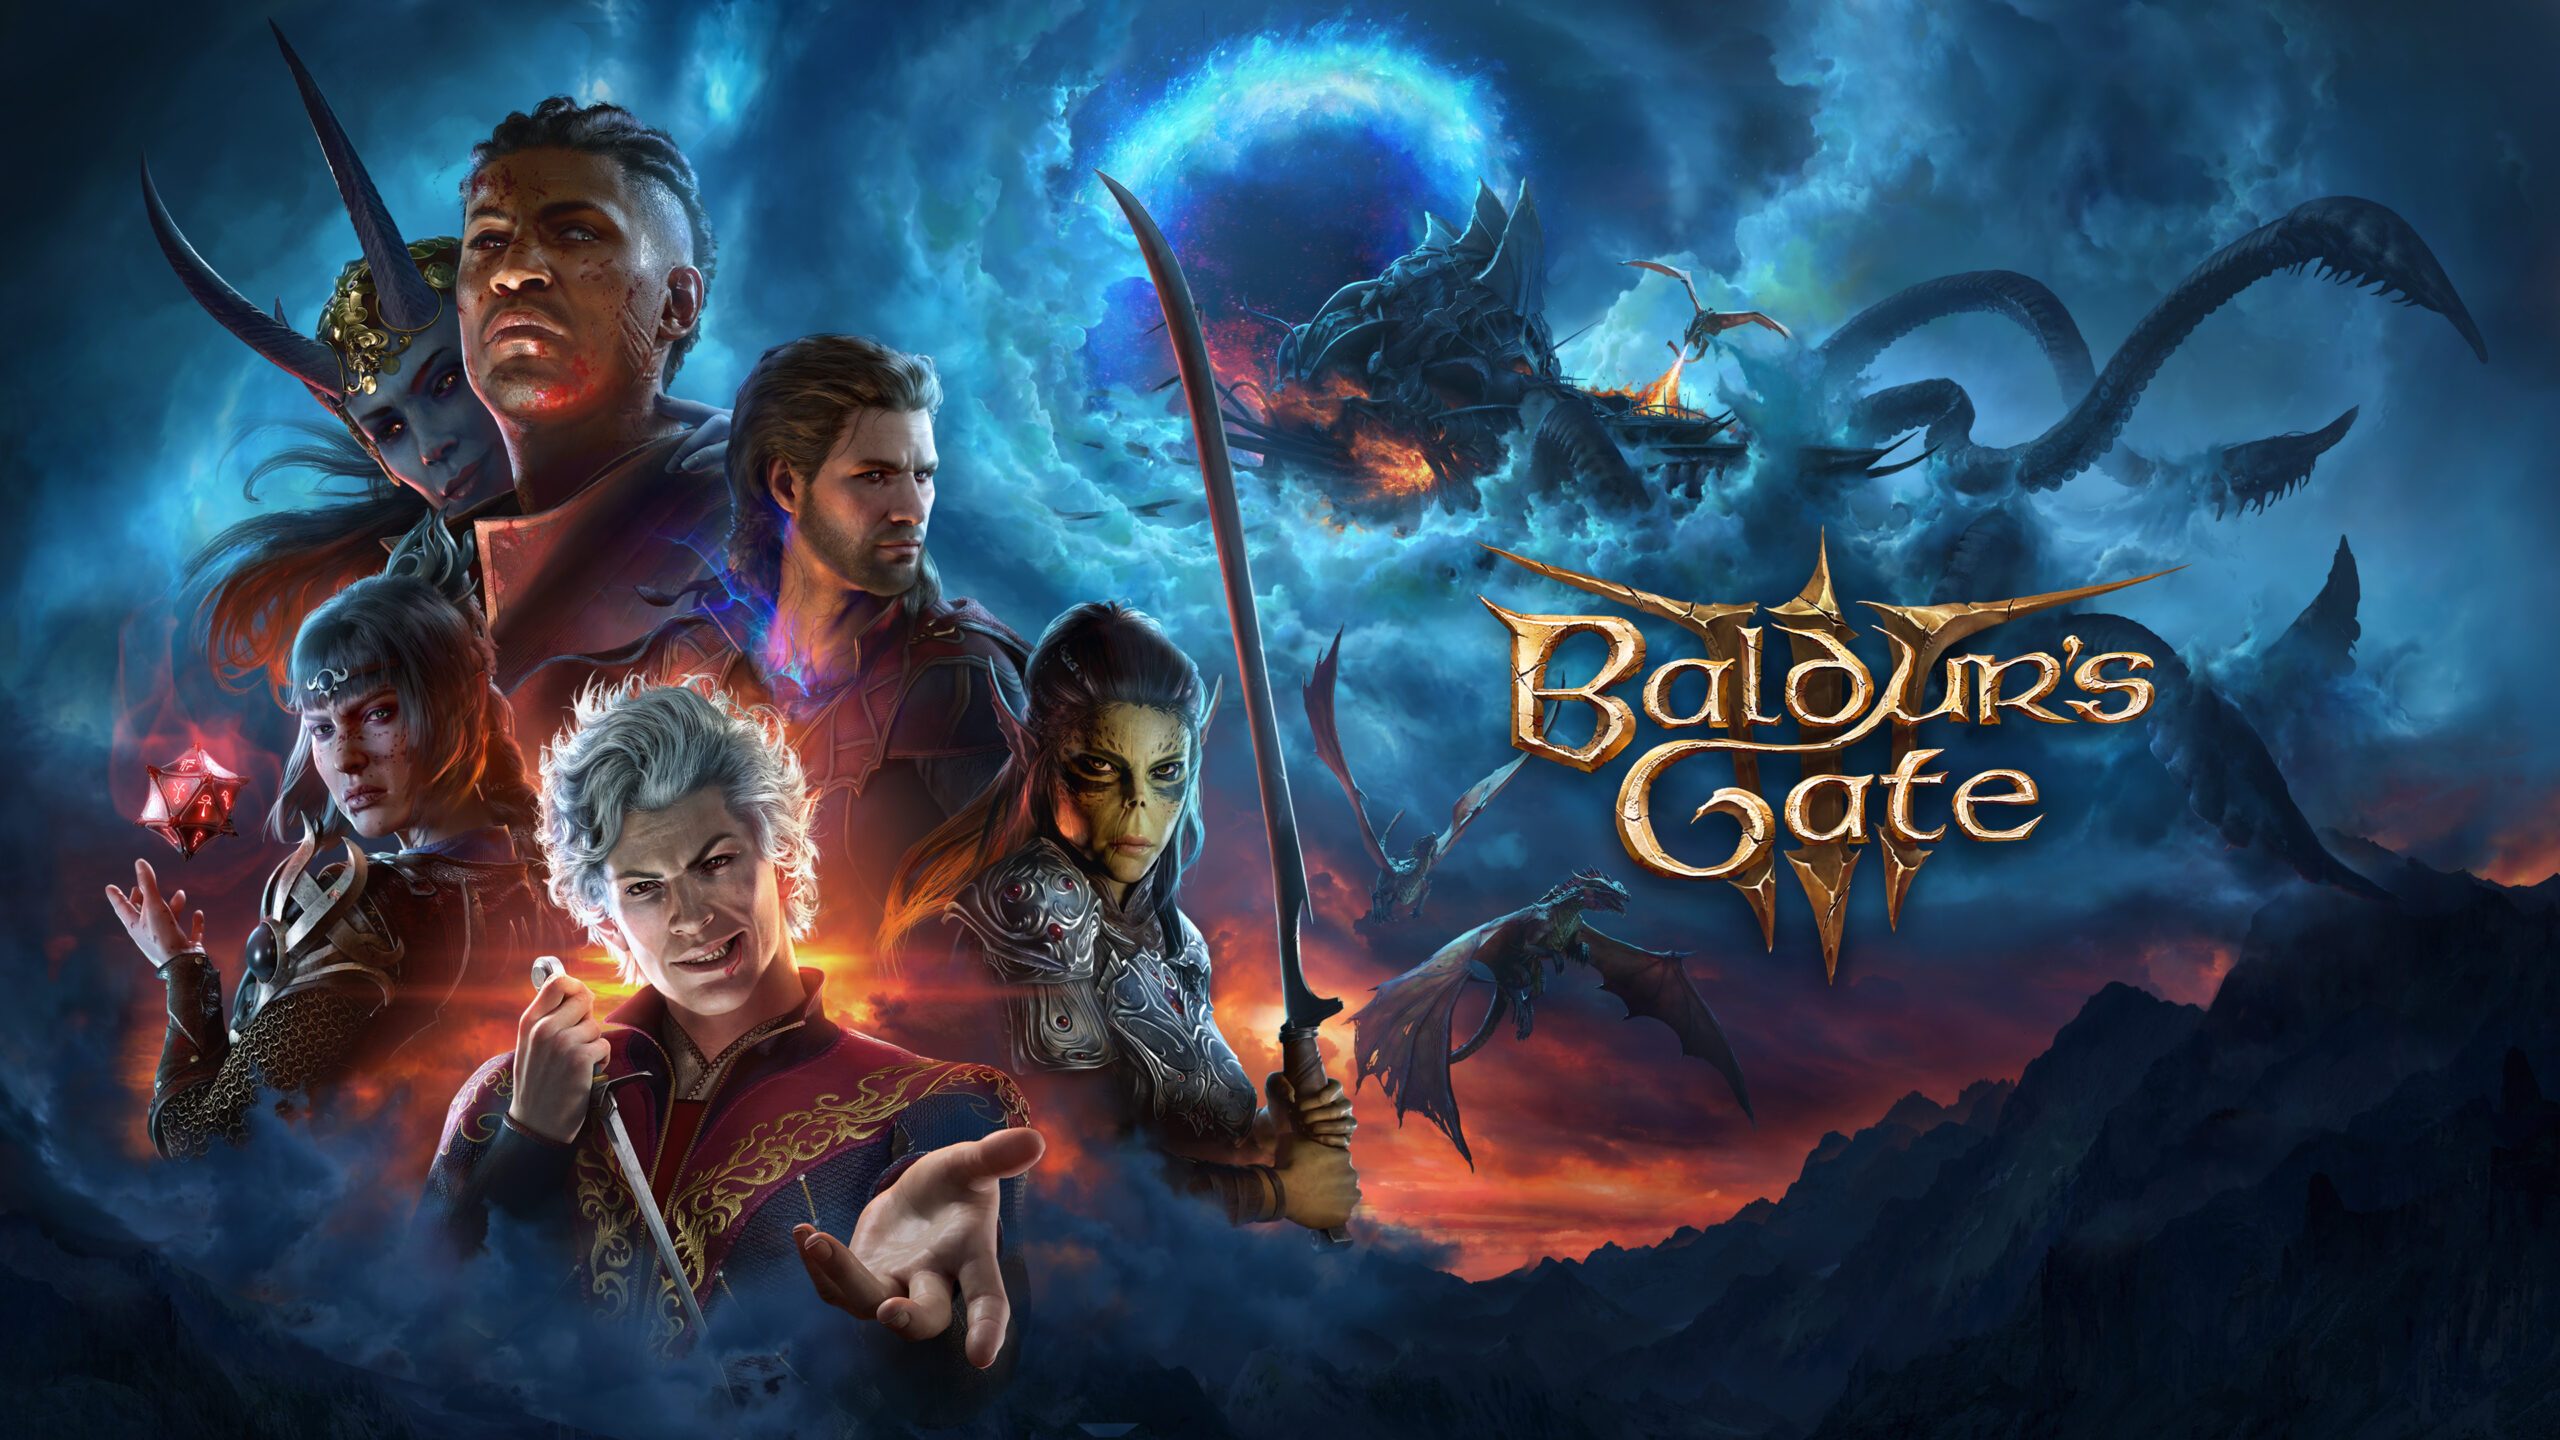 Baldur’s Gate 3 launches on PS5 August 31